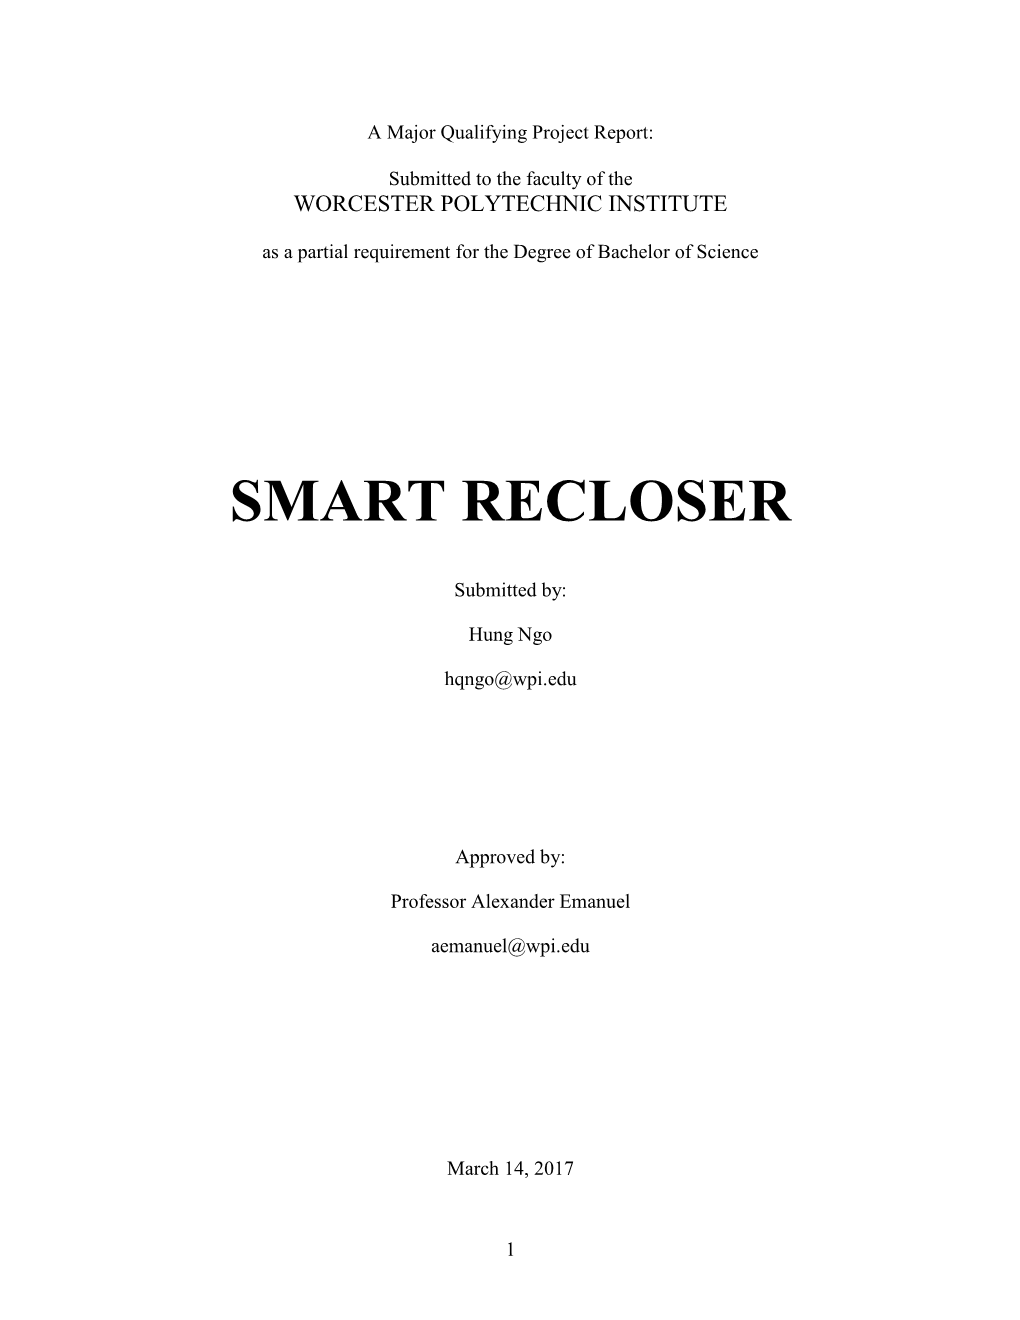 Smart Recloser